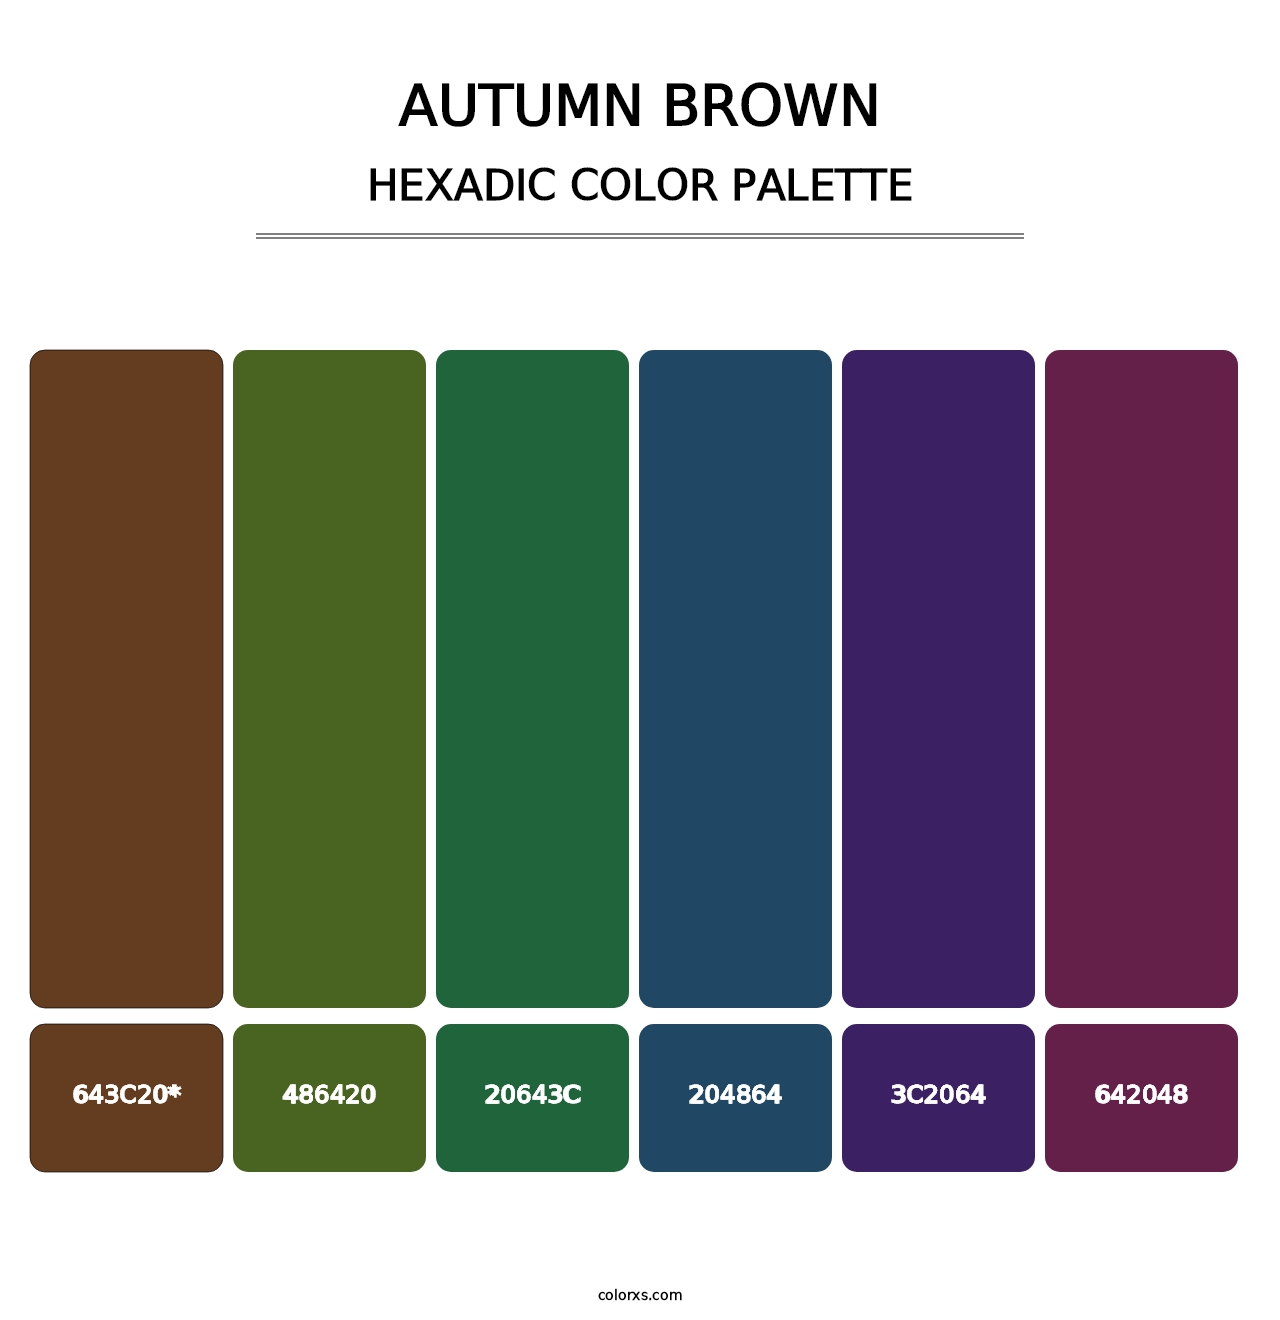 Autumn Brown - Hexadic Color Palette